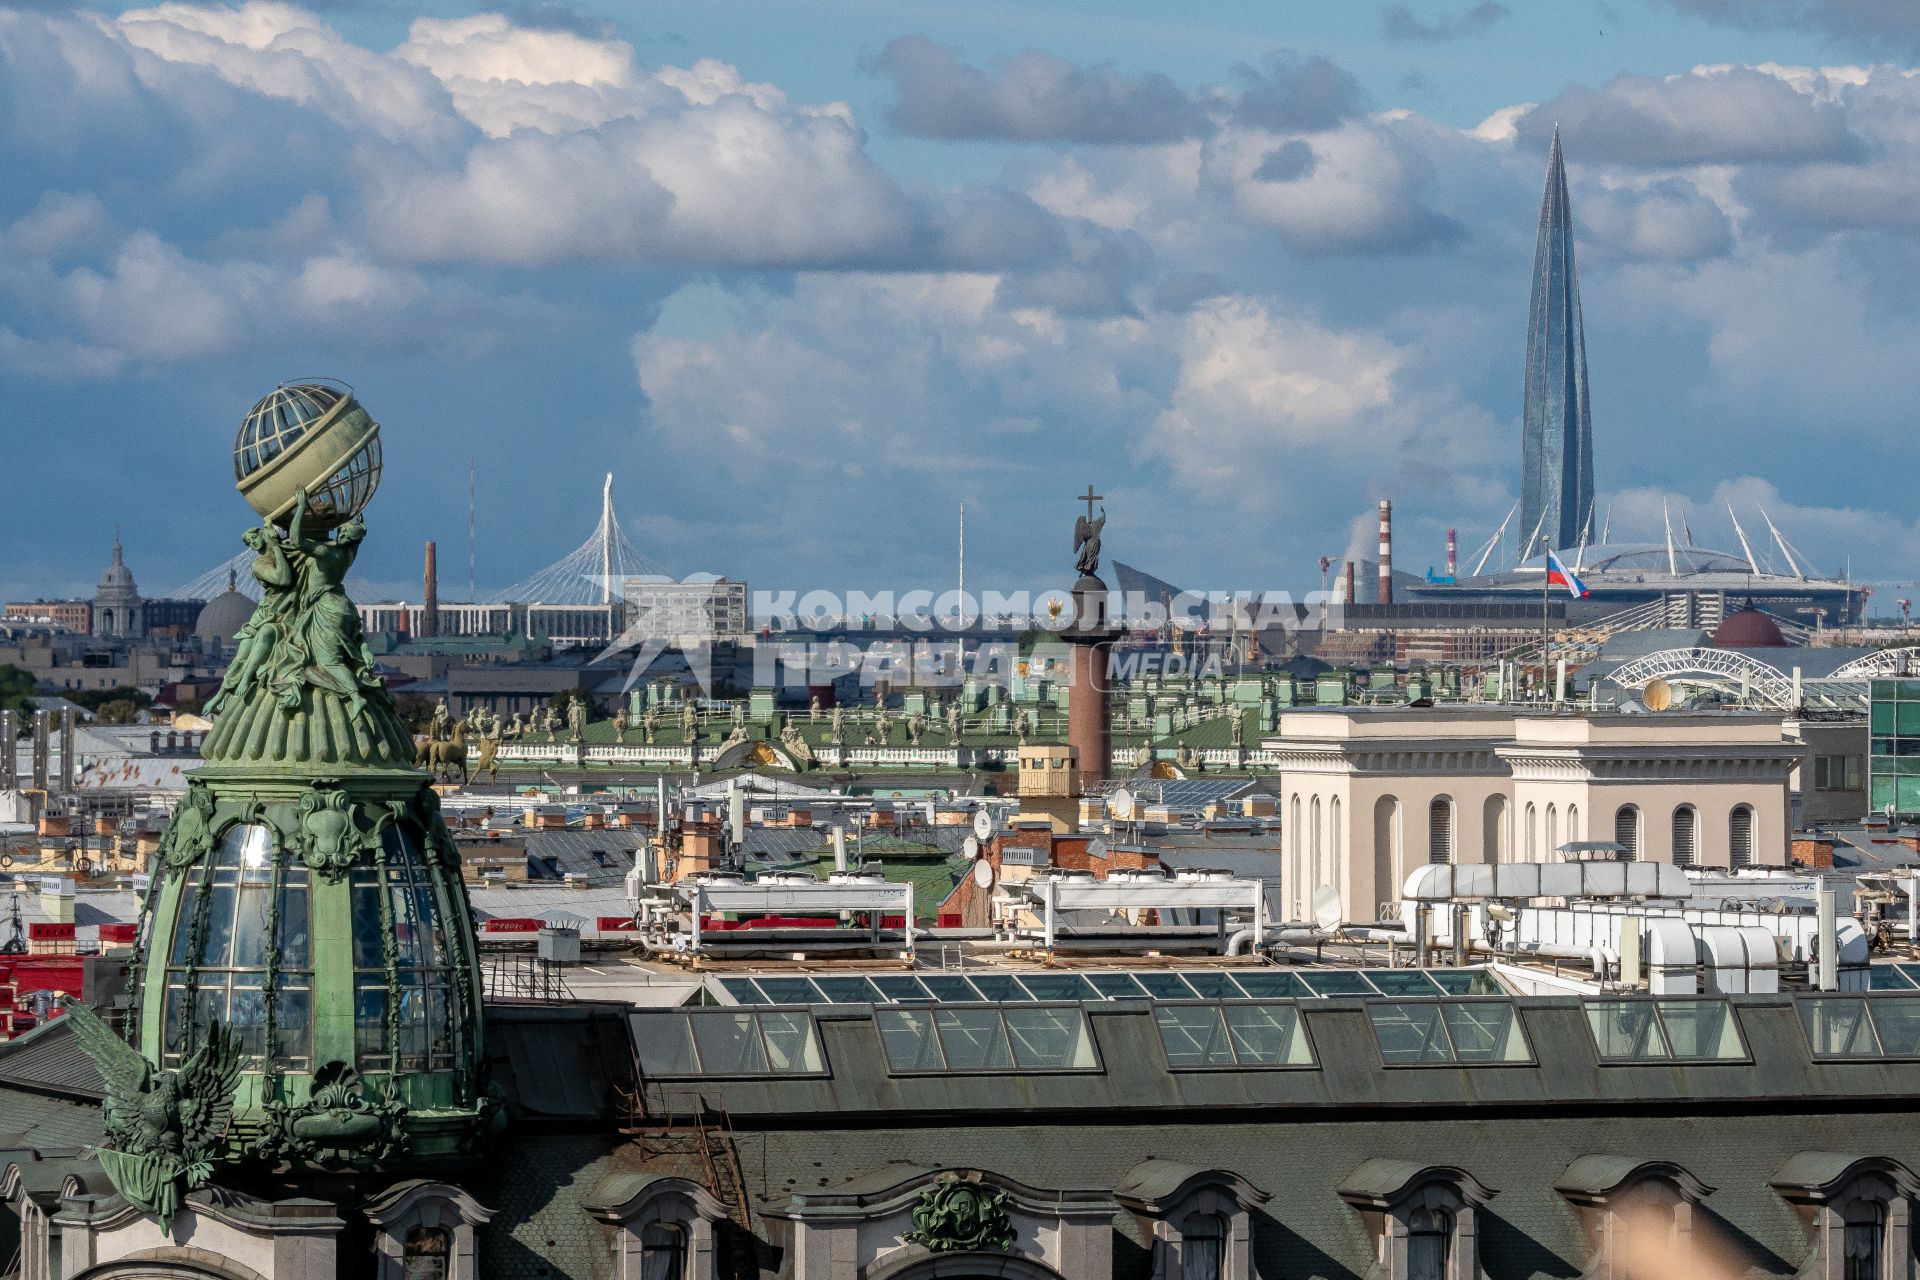 Санкт-Петербург. Вид на купол с глобусом (Дом компании Зингер), Александровскую колонну и `Лахта-центр`.